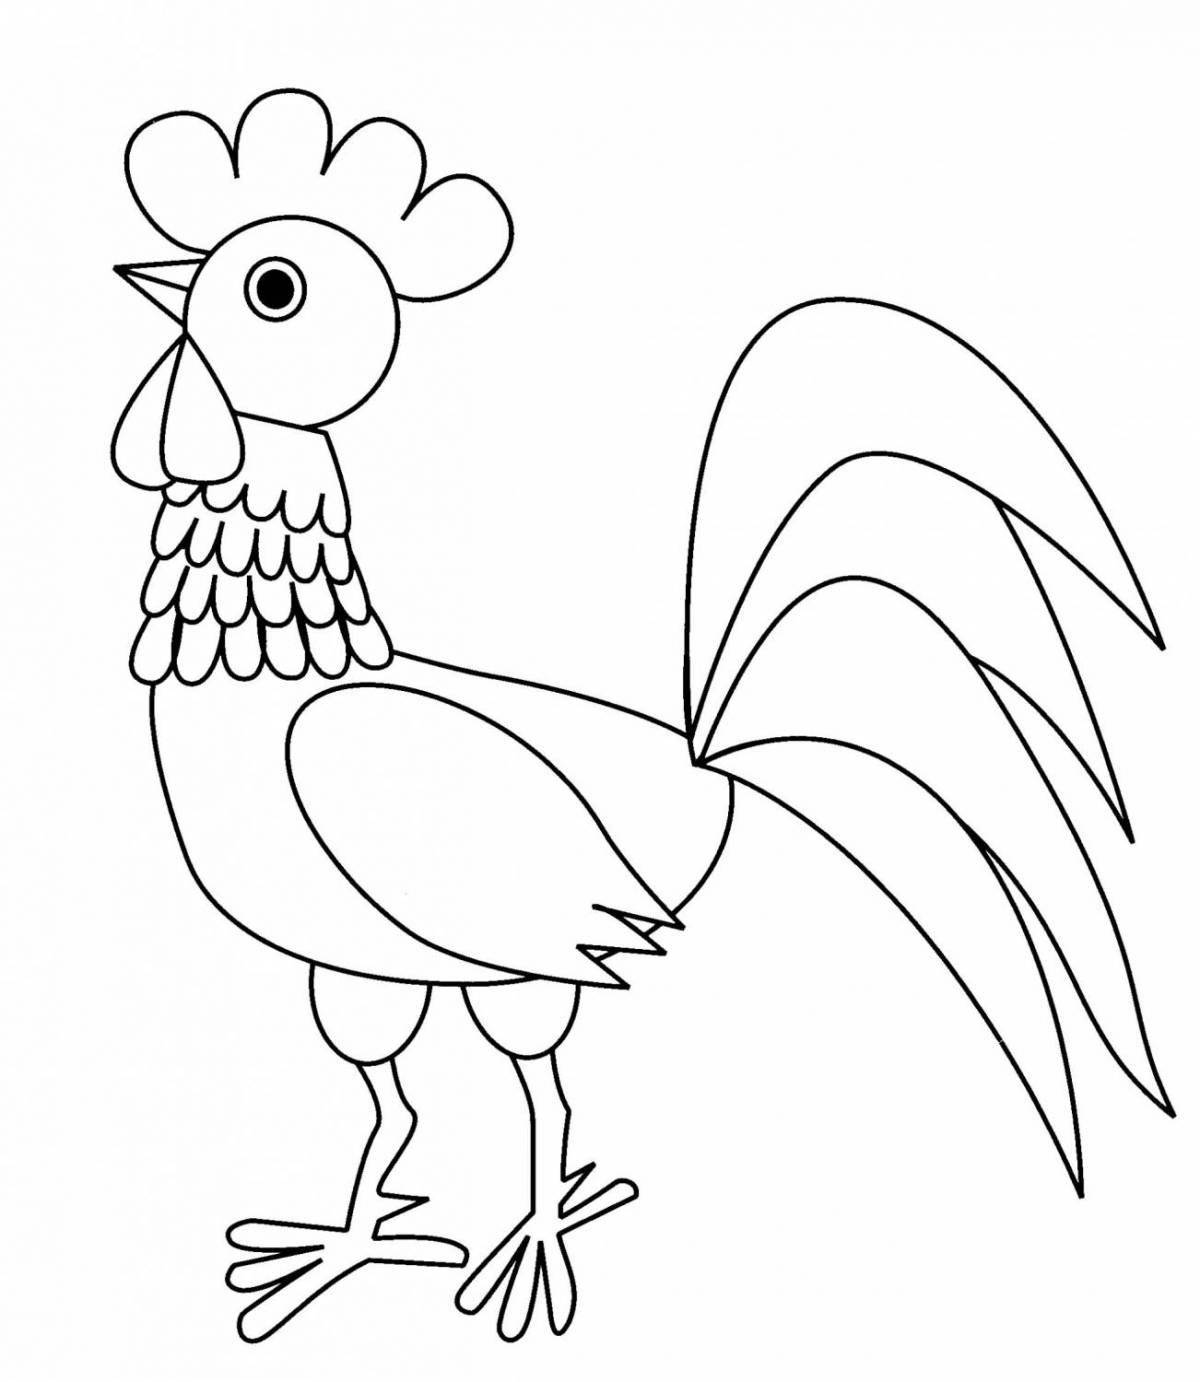 Coloring cockerel for kids